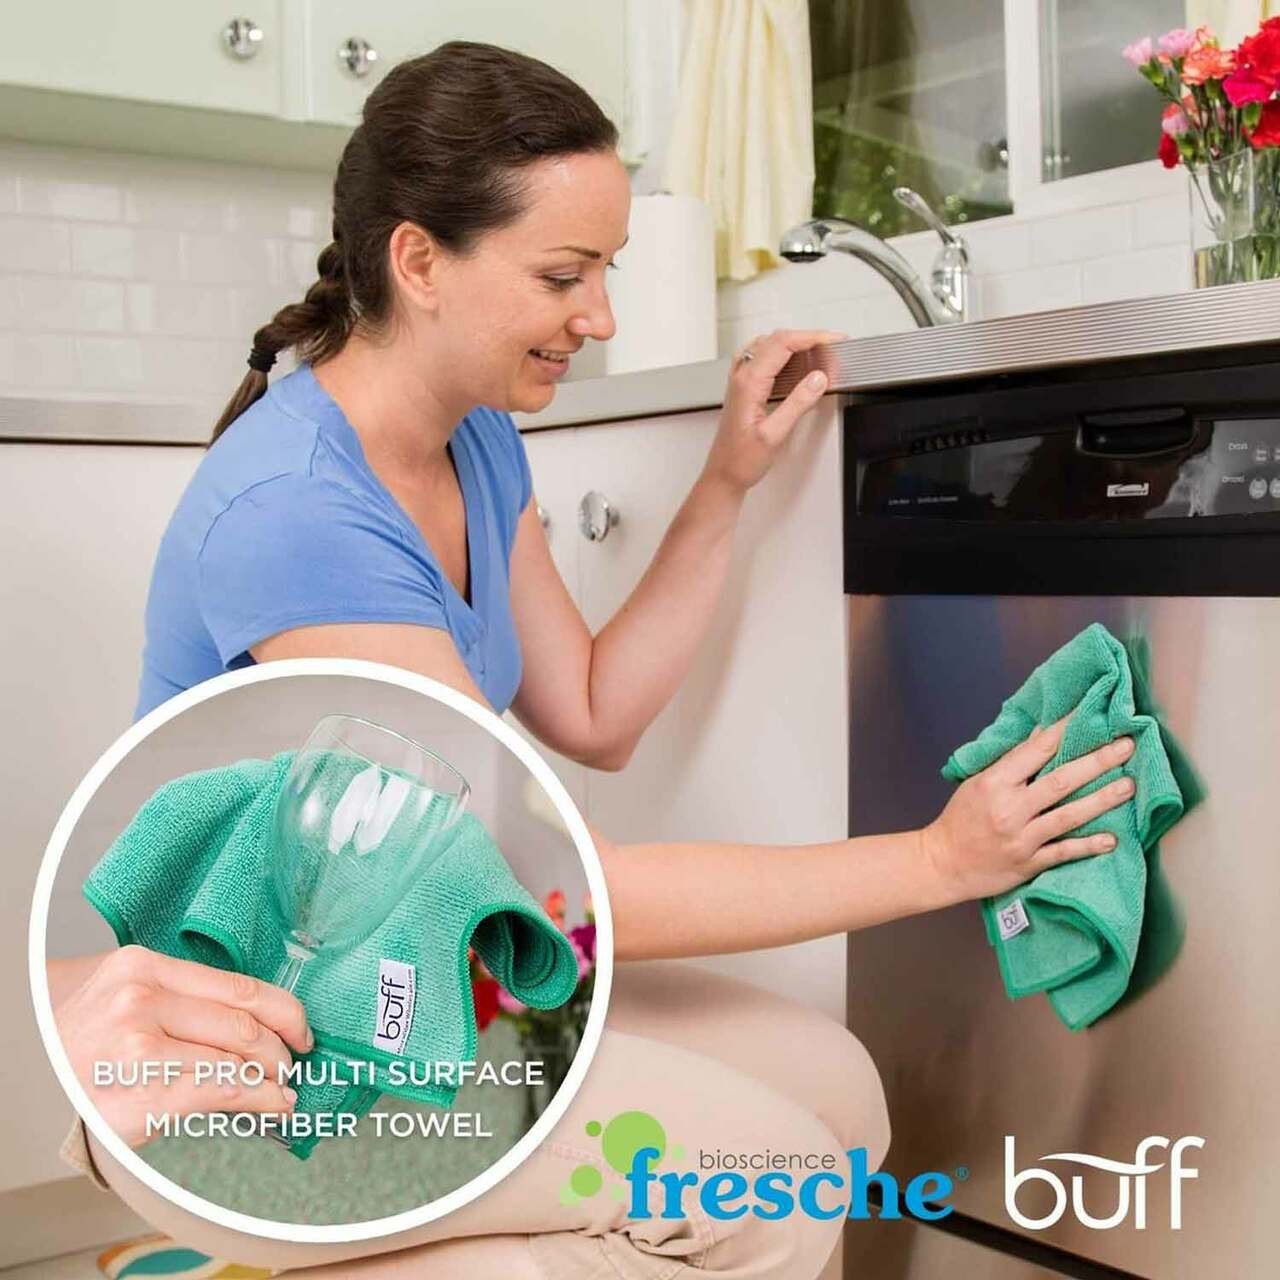 16x16 Buff™ Fresche® Antimicrobial Microfiber Towel